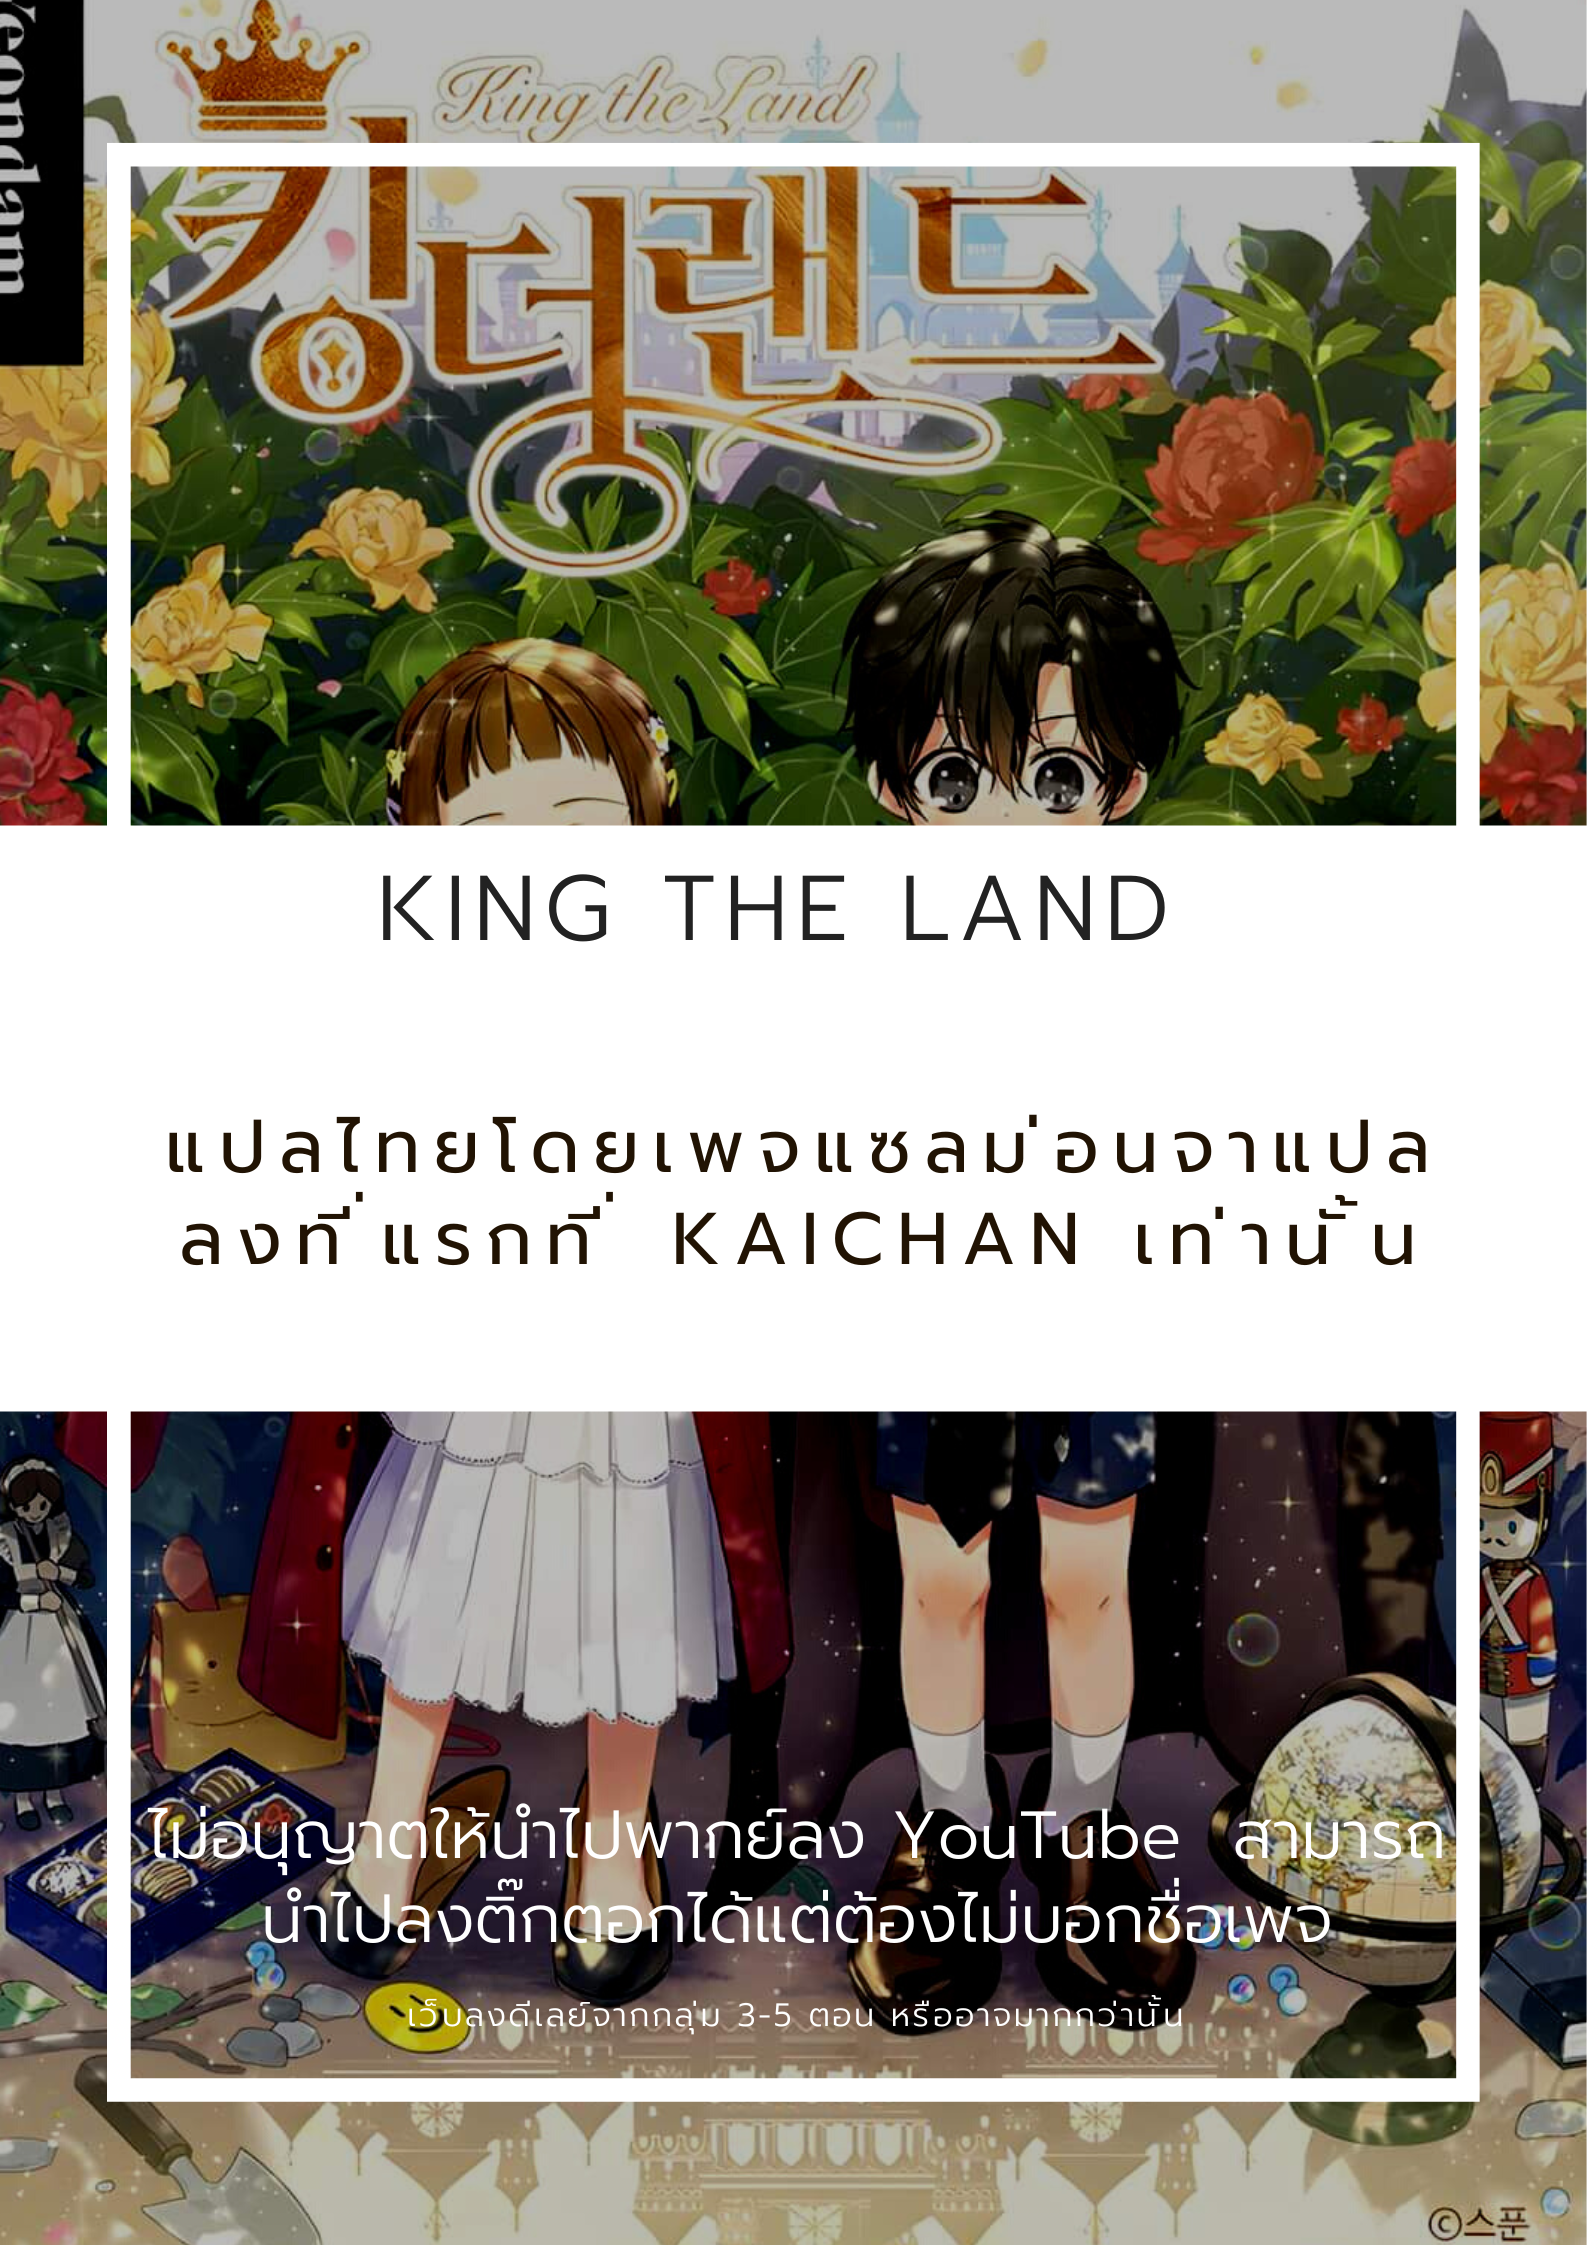 King the land ตอนที่ 7 (1)